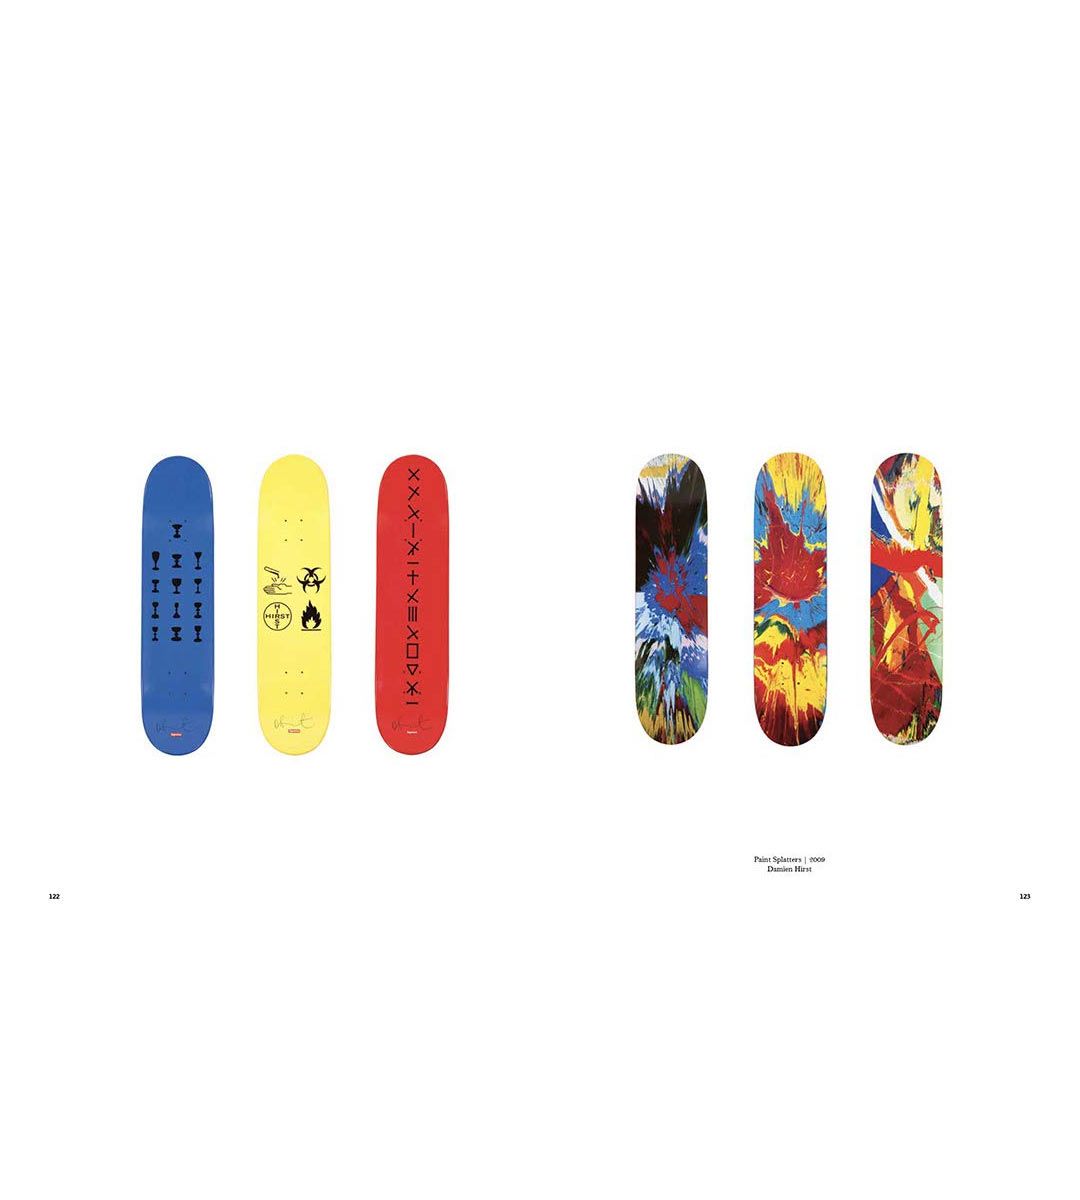 Supreme - Art on Deck : An Exploration of Supreme Skateboards from 1998-2018